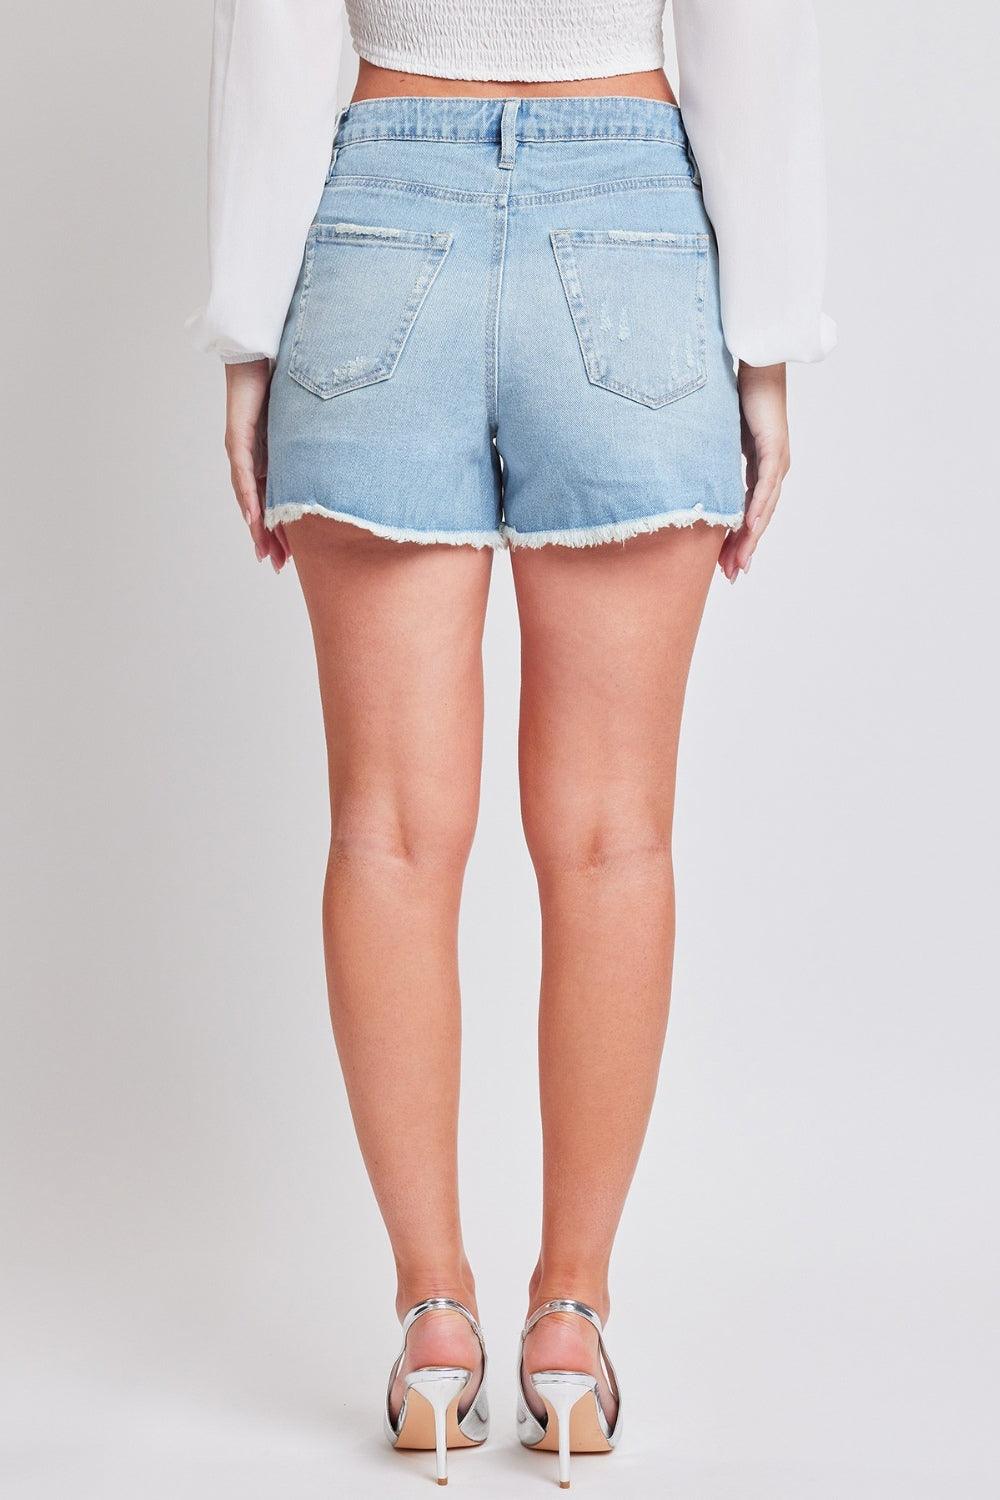 YMI Jeanswear Distressed Frayed Hem Denim Shorts - Wildflower Hippies